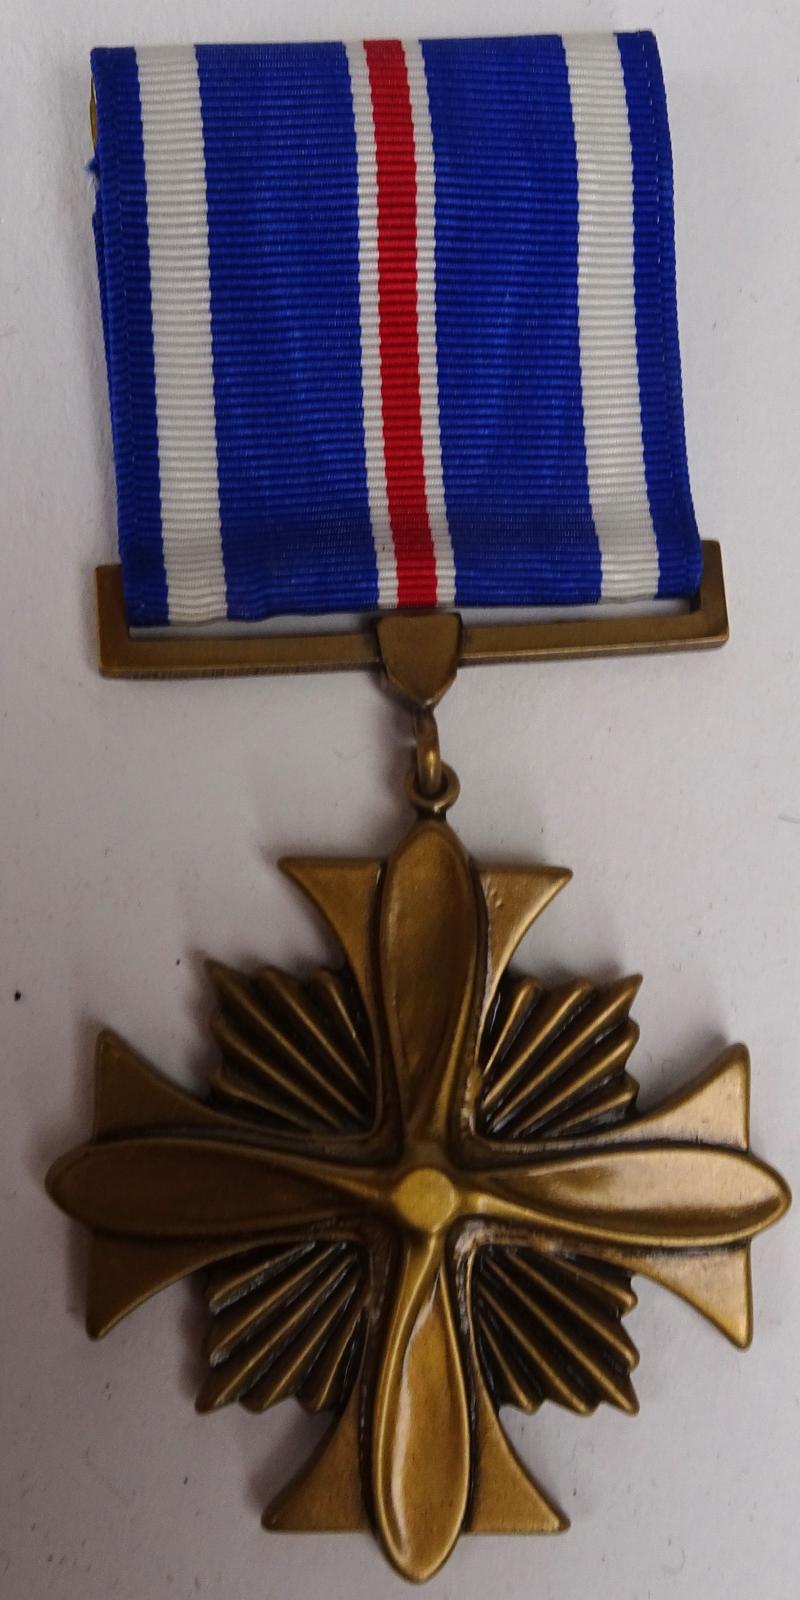 A   U.S Military Distinguished Flying Cross